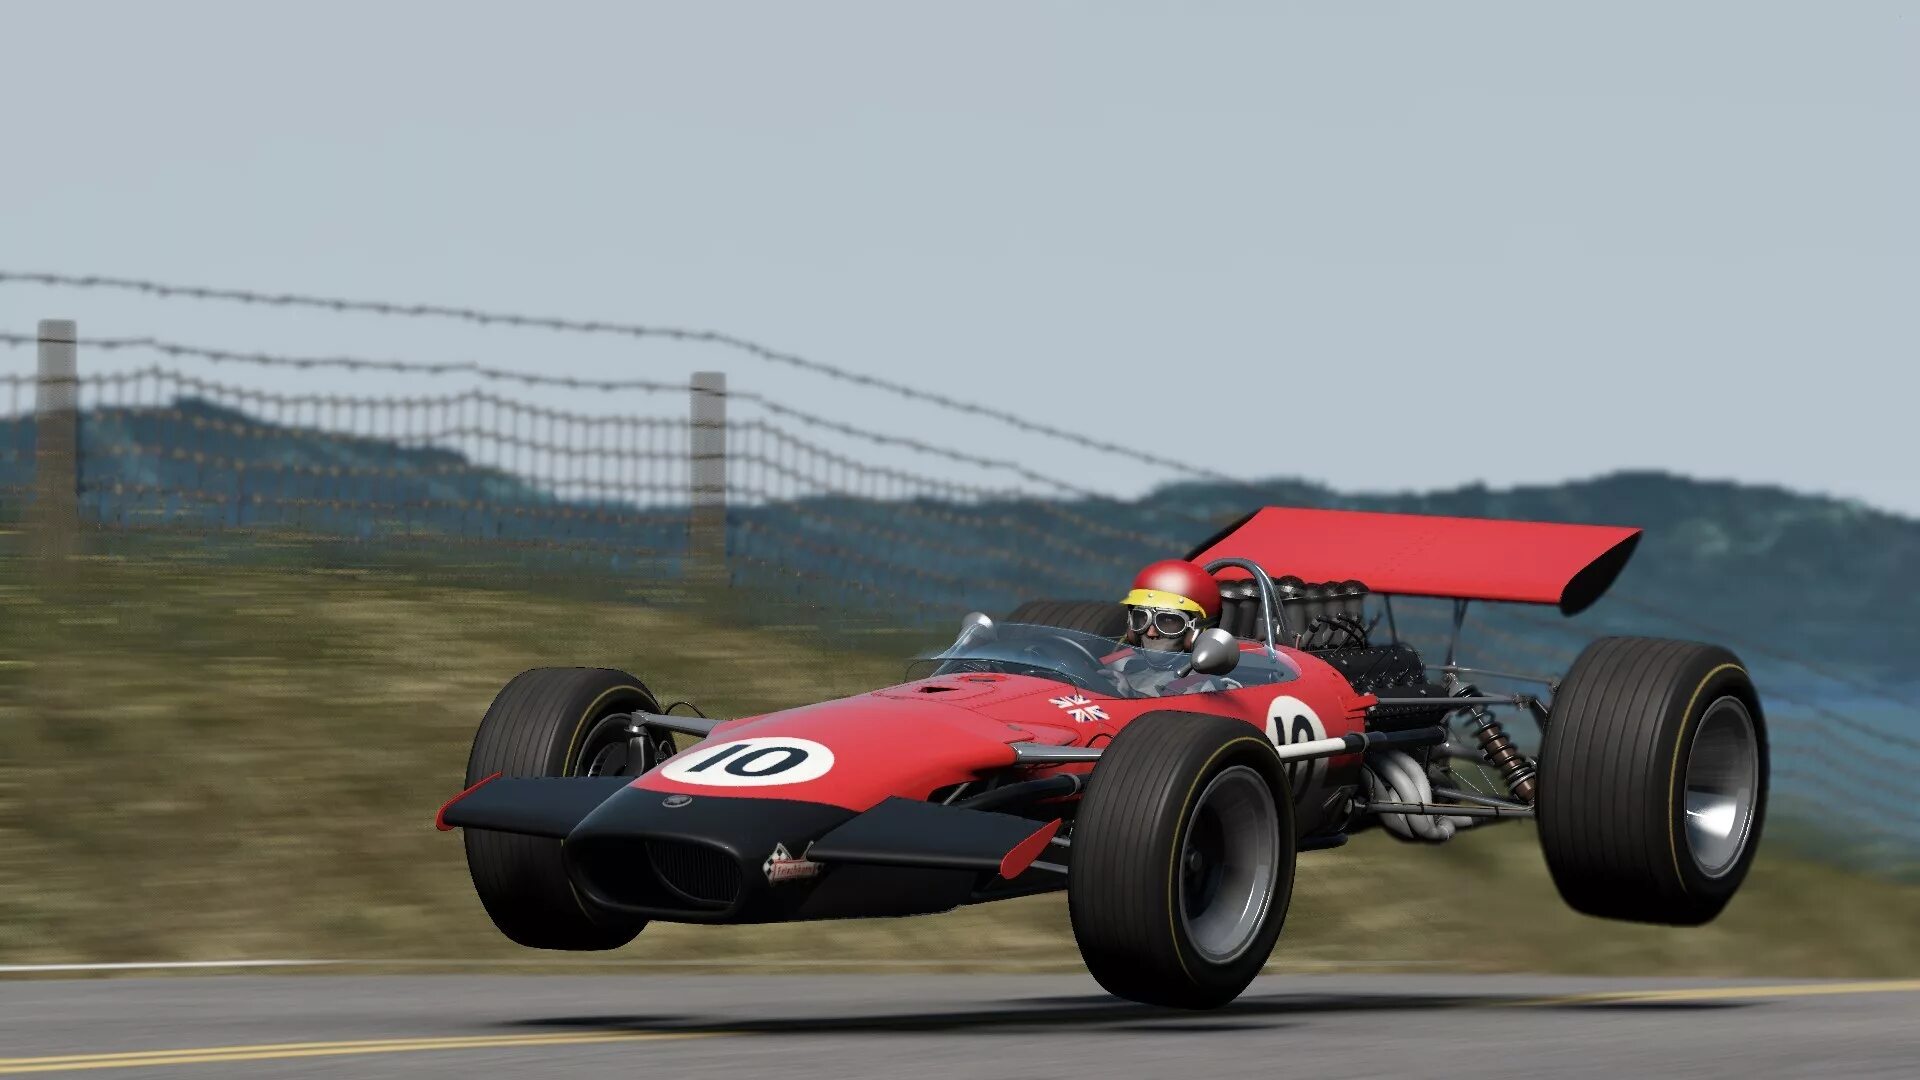 Ferrari race legends. Test Drive: Ferrari Racing Legends. Project cars. Project cars 2. Игра автомобильные гонки 2013 года-.